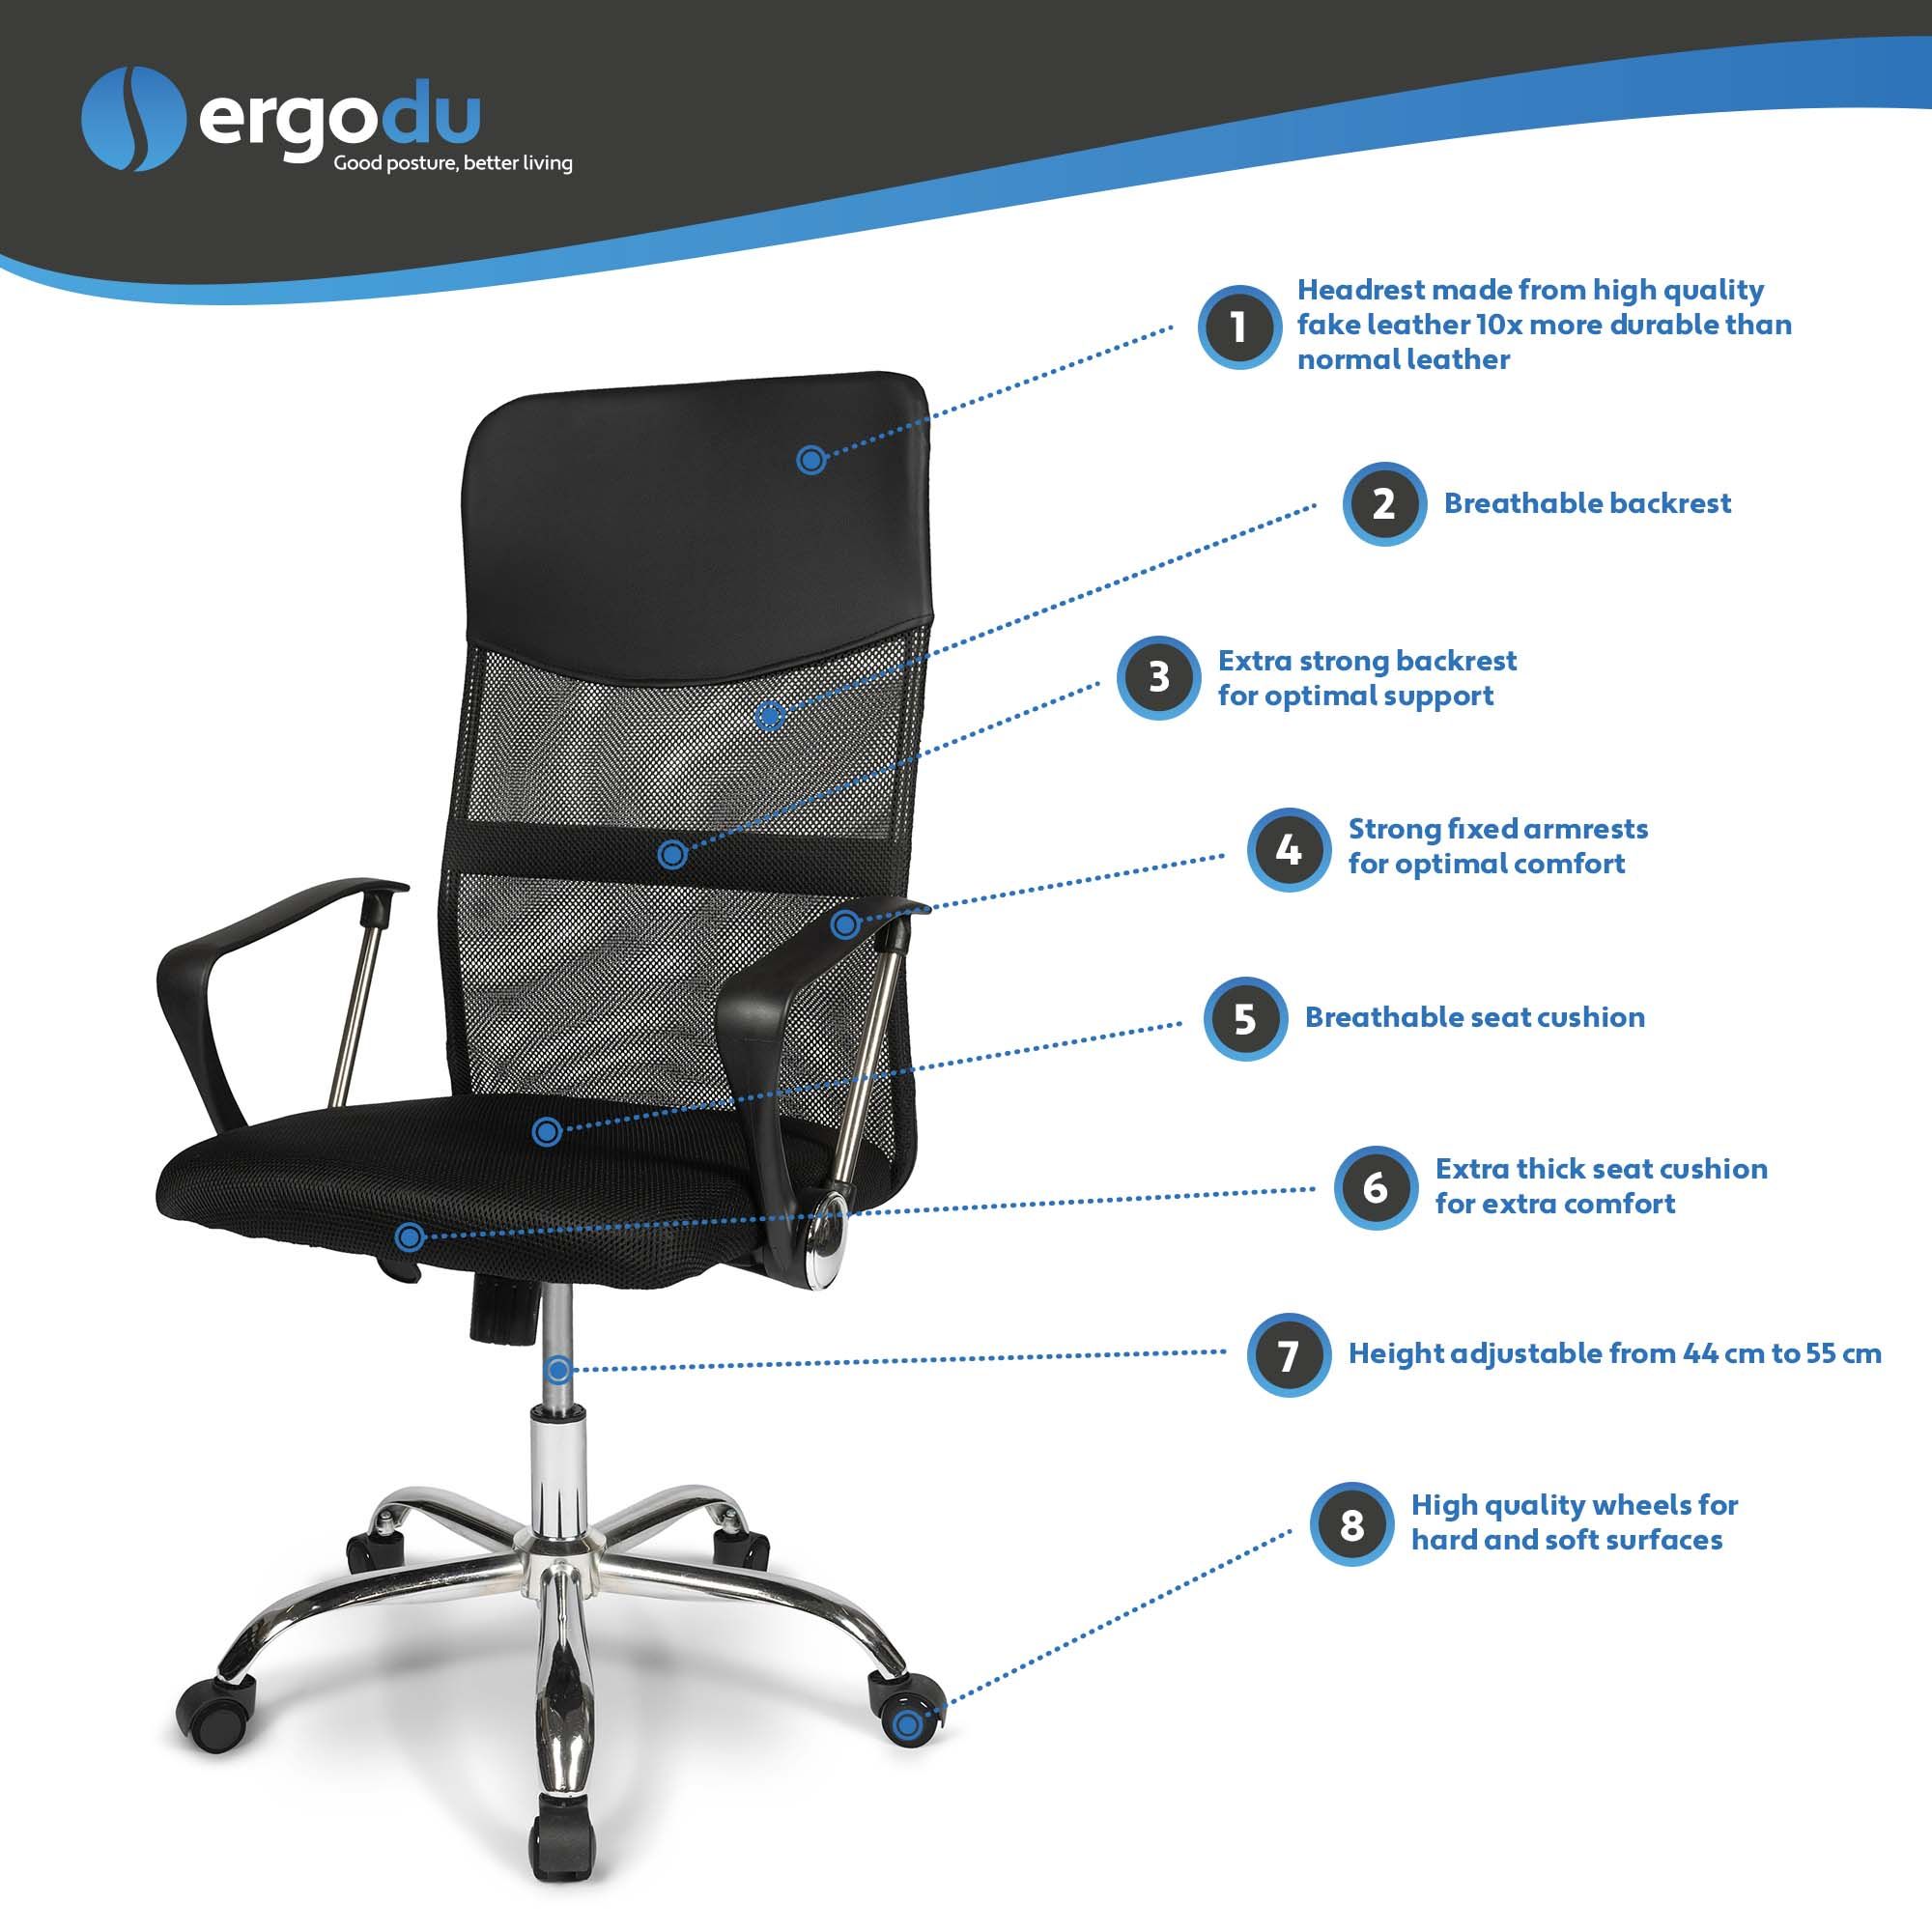 Ergodu Ergonomic Mesh Office Chair USP's